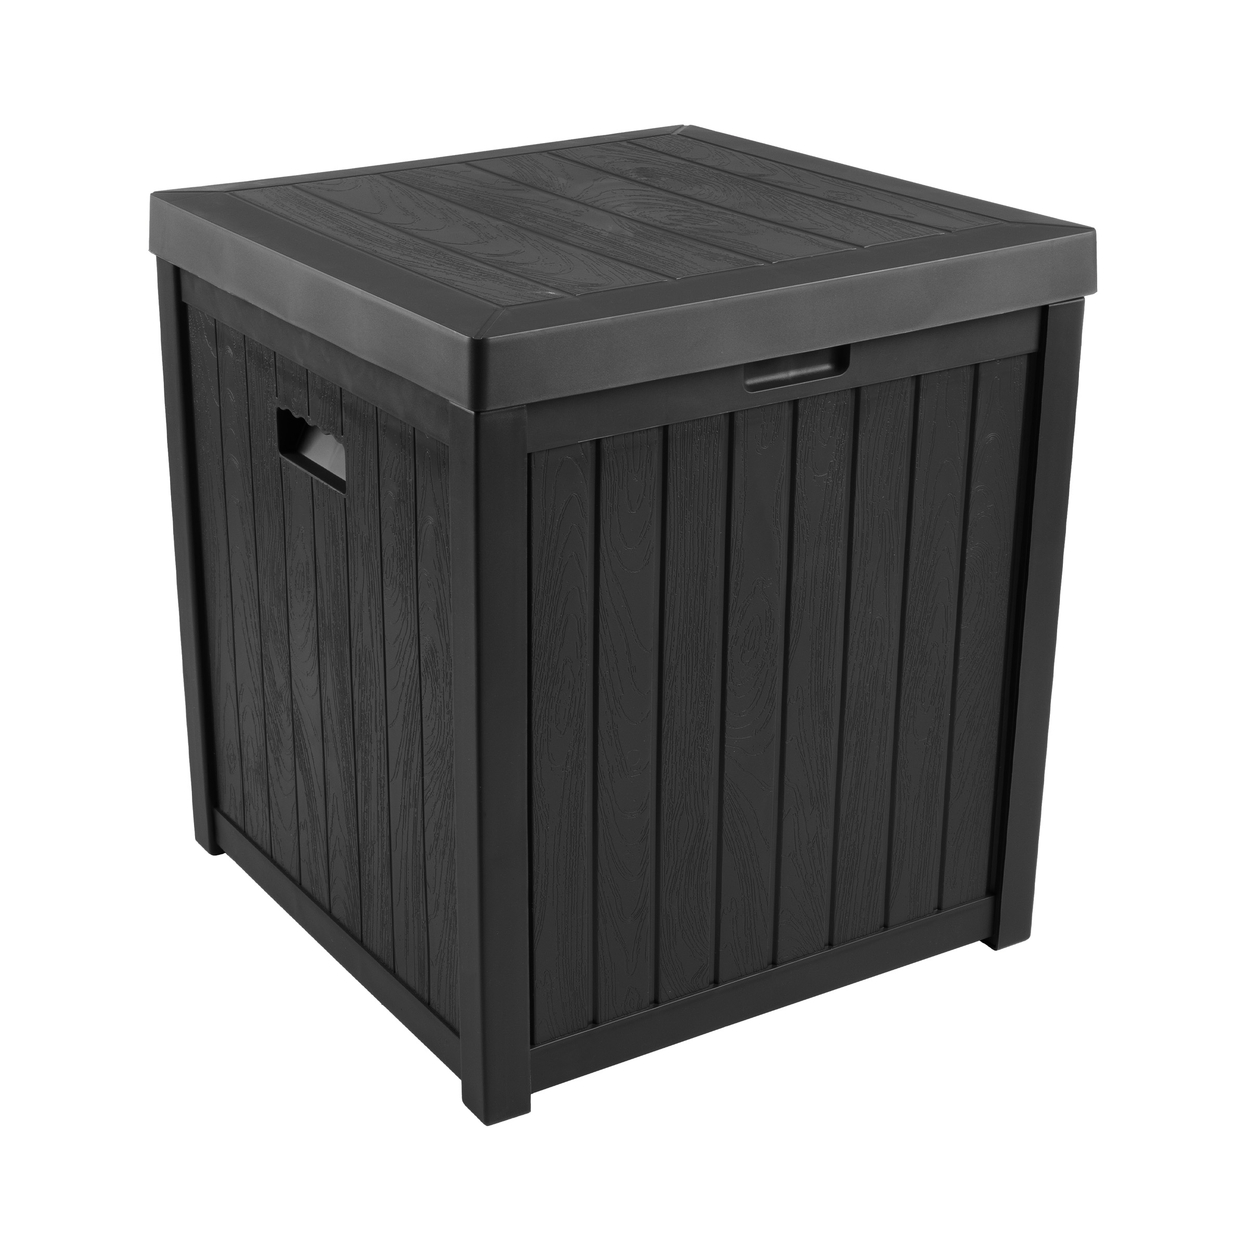 Outdoor Indoor 50 Gallon Storage Container Resin Deck Box 22 X 24 Inch - Black